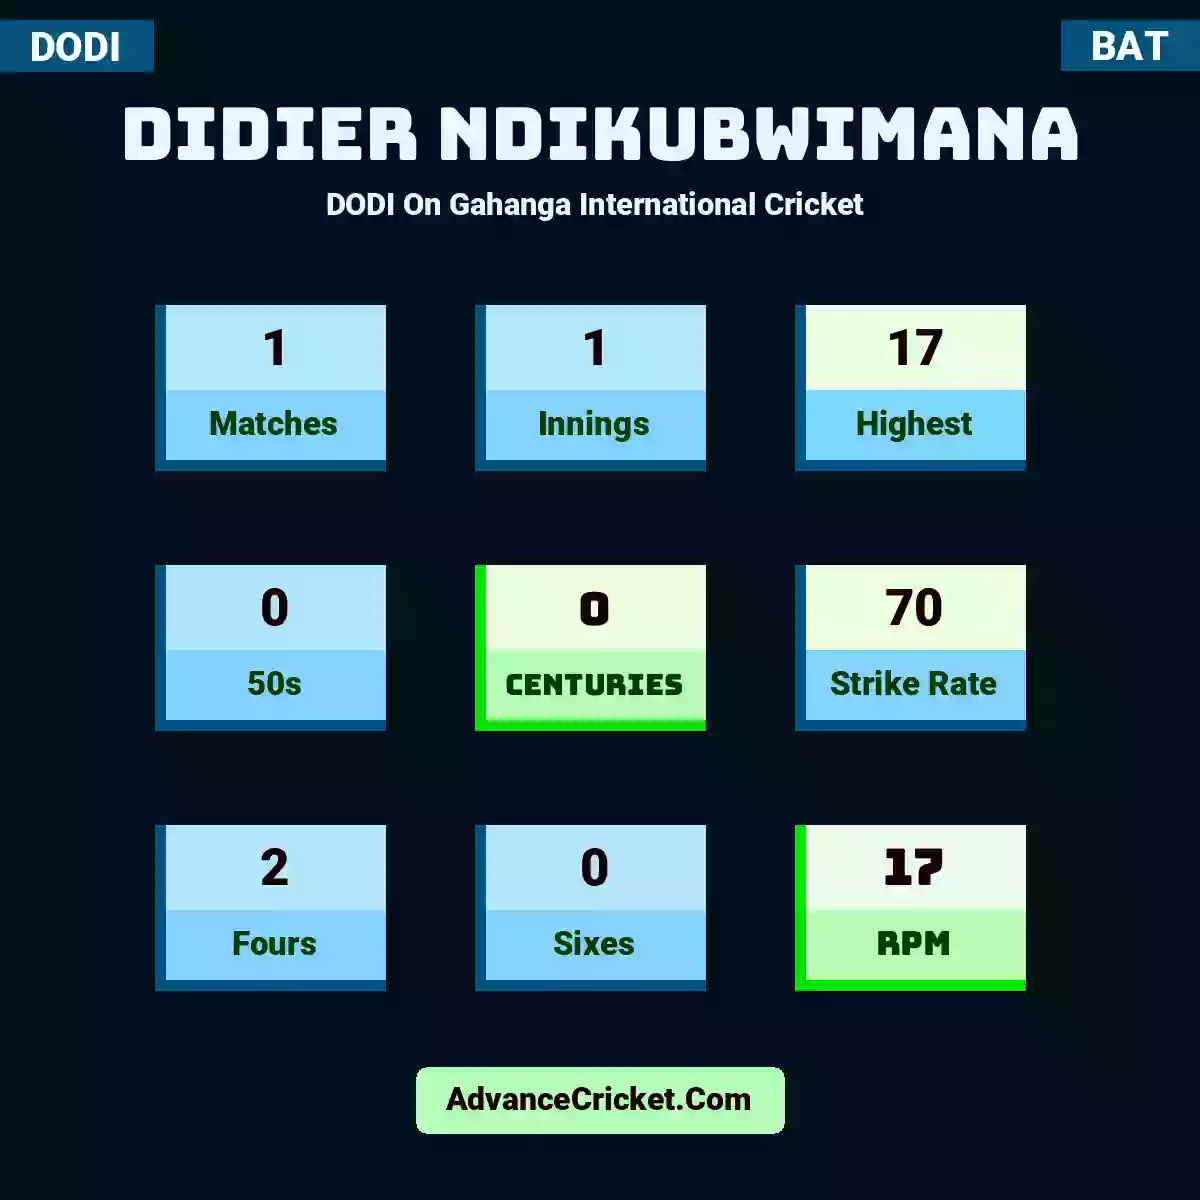 Didier Ndikubwimana DODI  On Gahanga International Cricket , Didier Ndikubwimana played 1 matches, scored 17 runs as highest, 0 half-centuries, and 0 centuries, with a strike rate of 70. D.Ndikubwimana hit 2 fours and 0 sixes, with an RPM of 17.